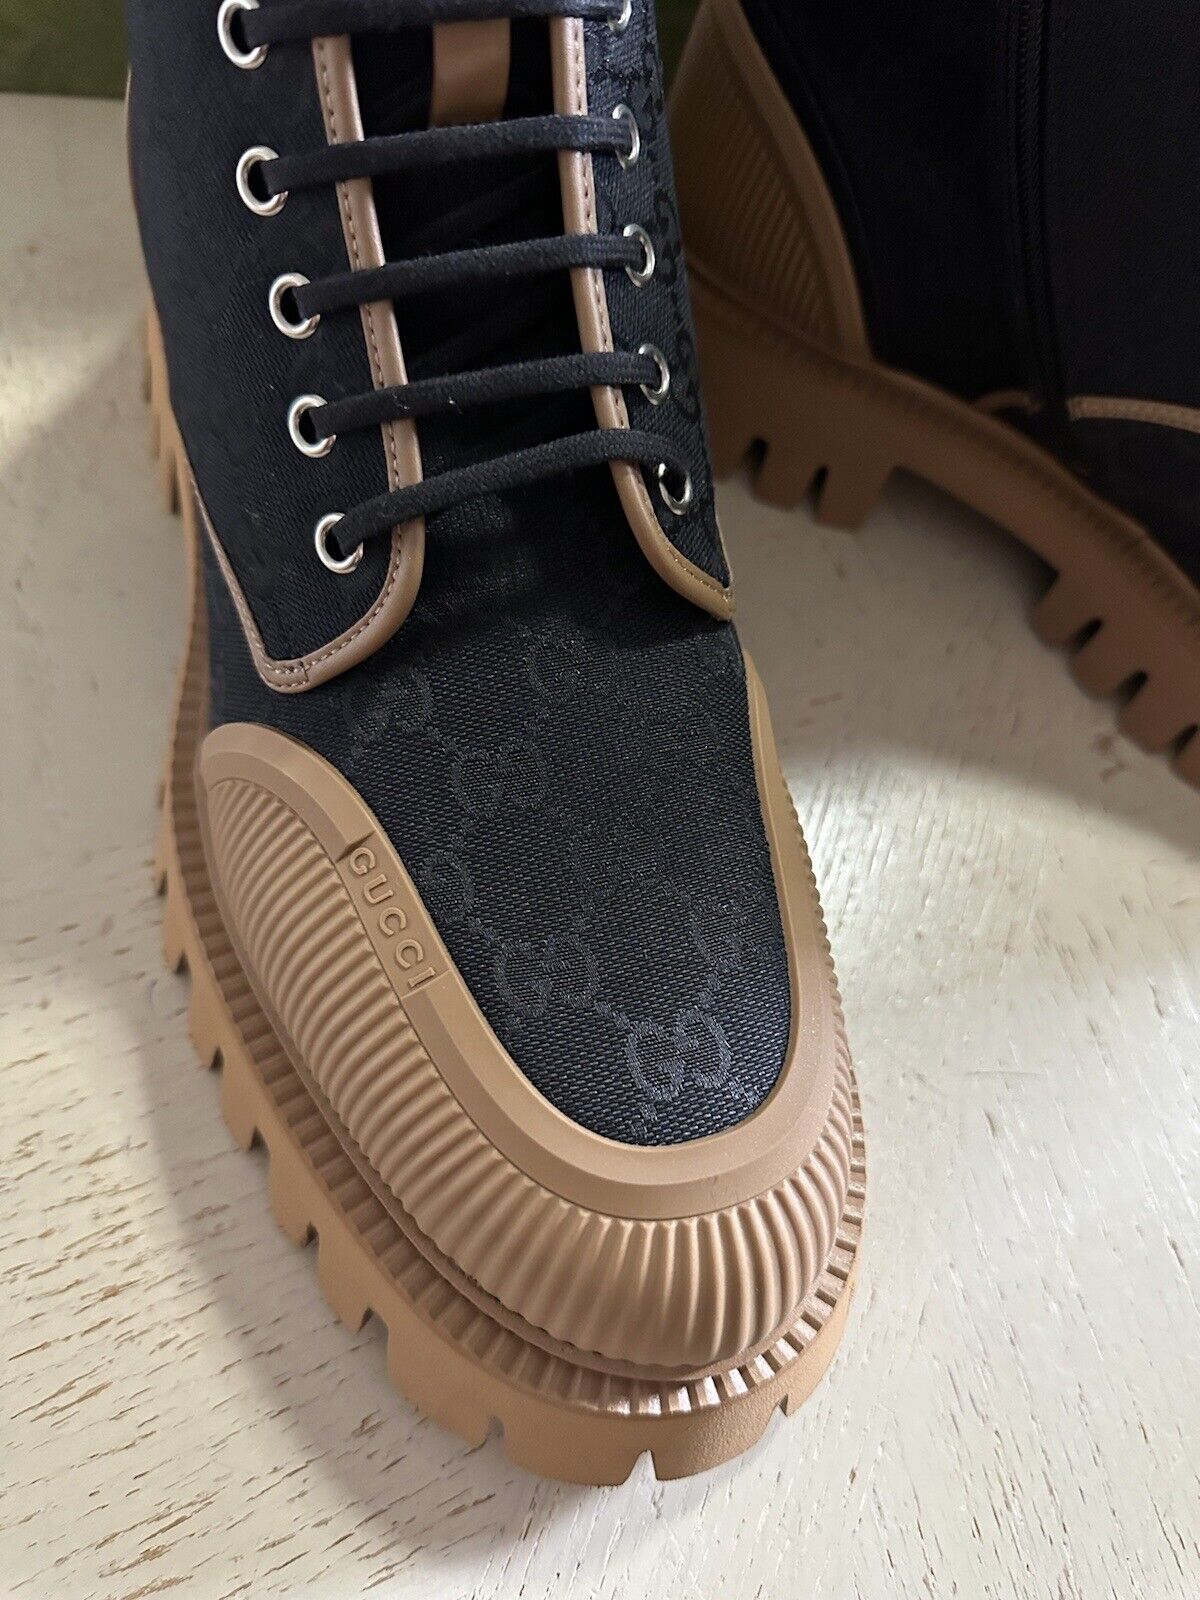 NIB Gucci Men GG Logo Canvas/Leather Boots Shoes Black/Beige 12 US/11 UK 699970